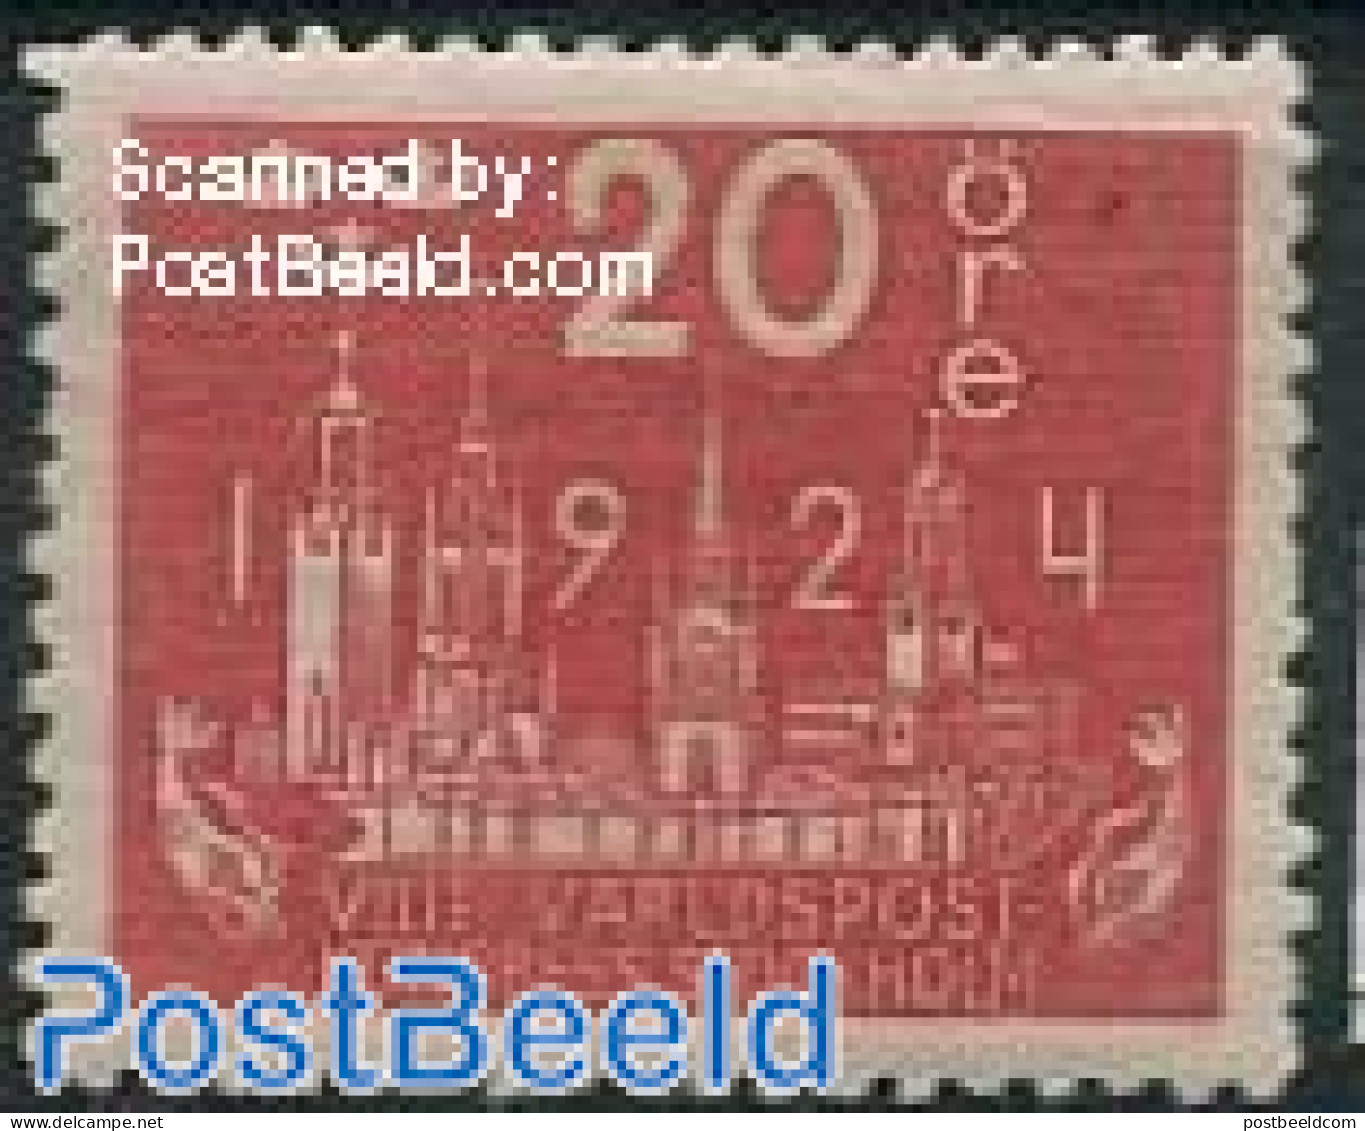 Sweden 1924 20o, Stamp Out Of Set, Unused (hinged) - Ongebruikt